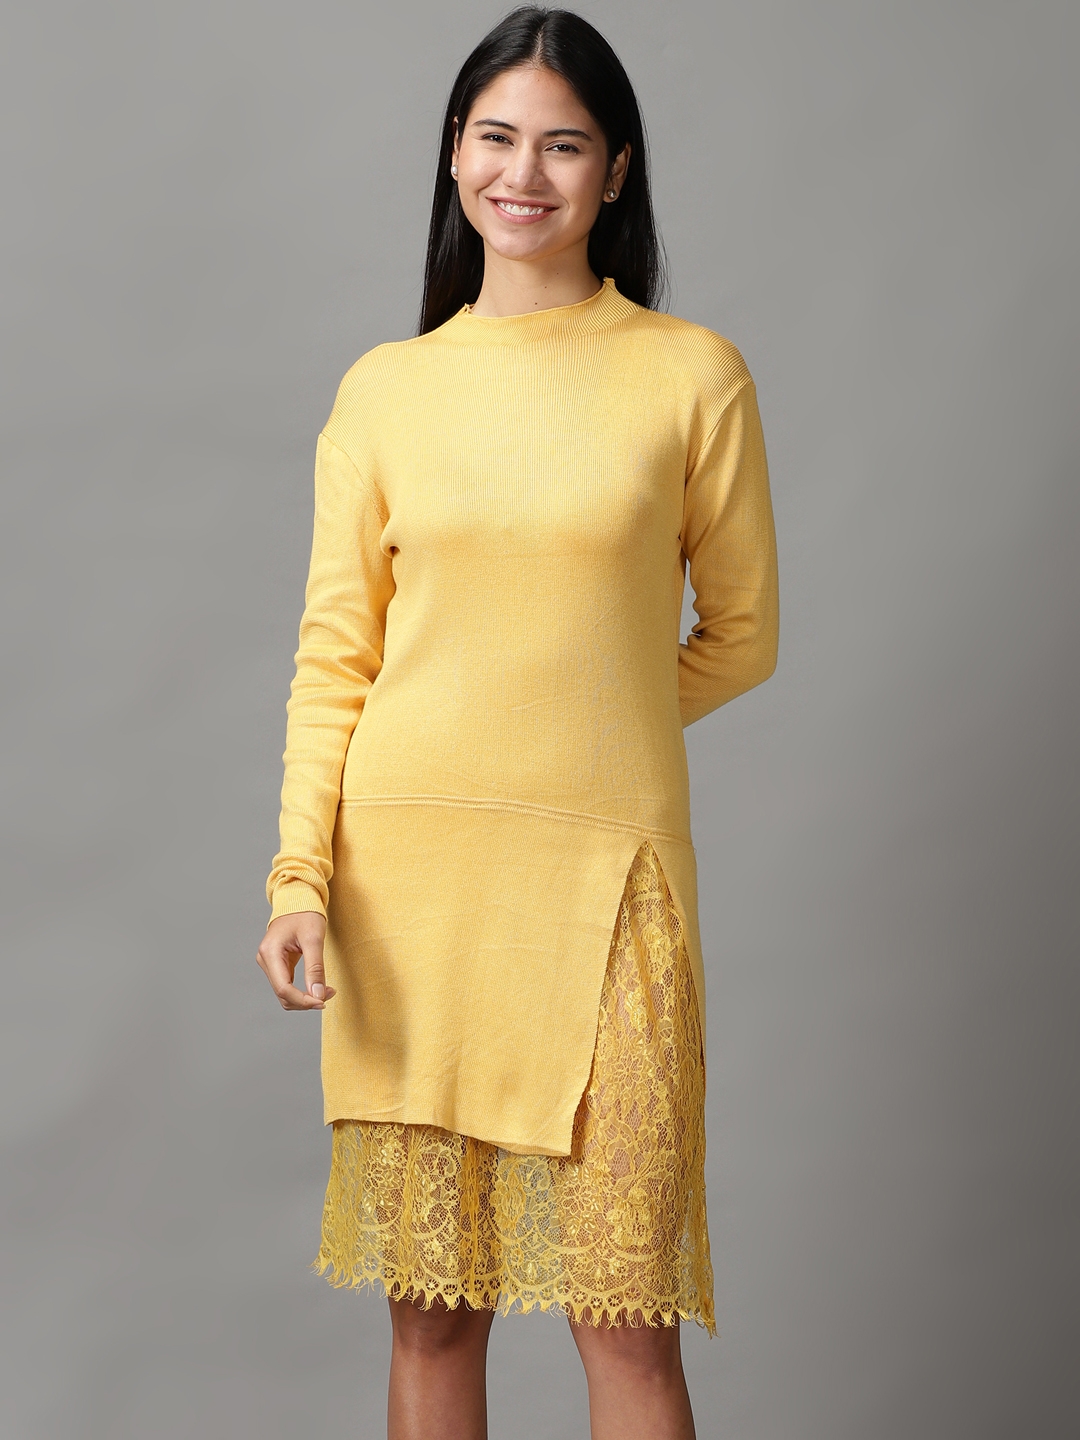 Women's Yellow Acrylic Solid Dresses